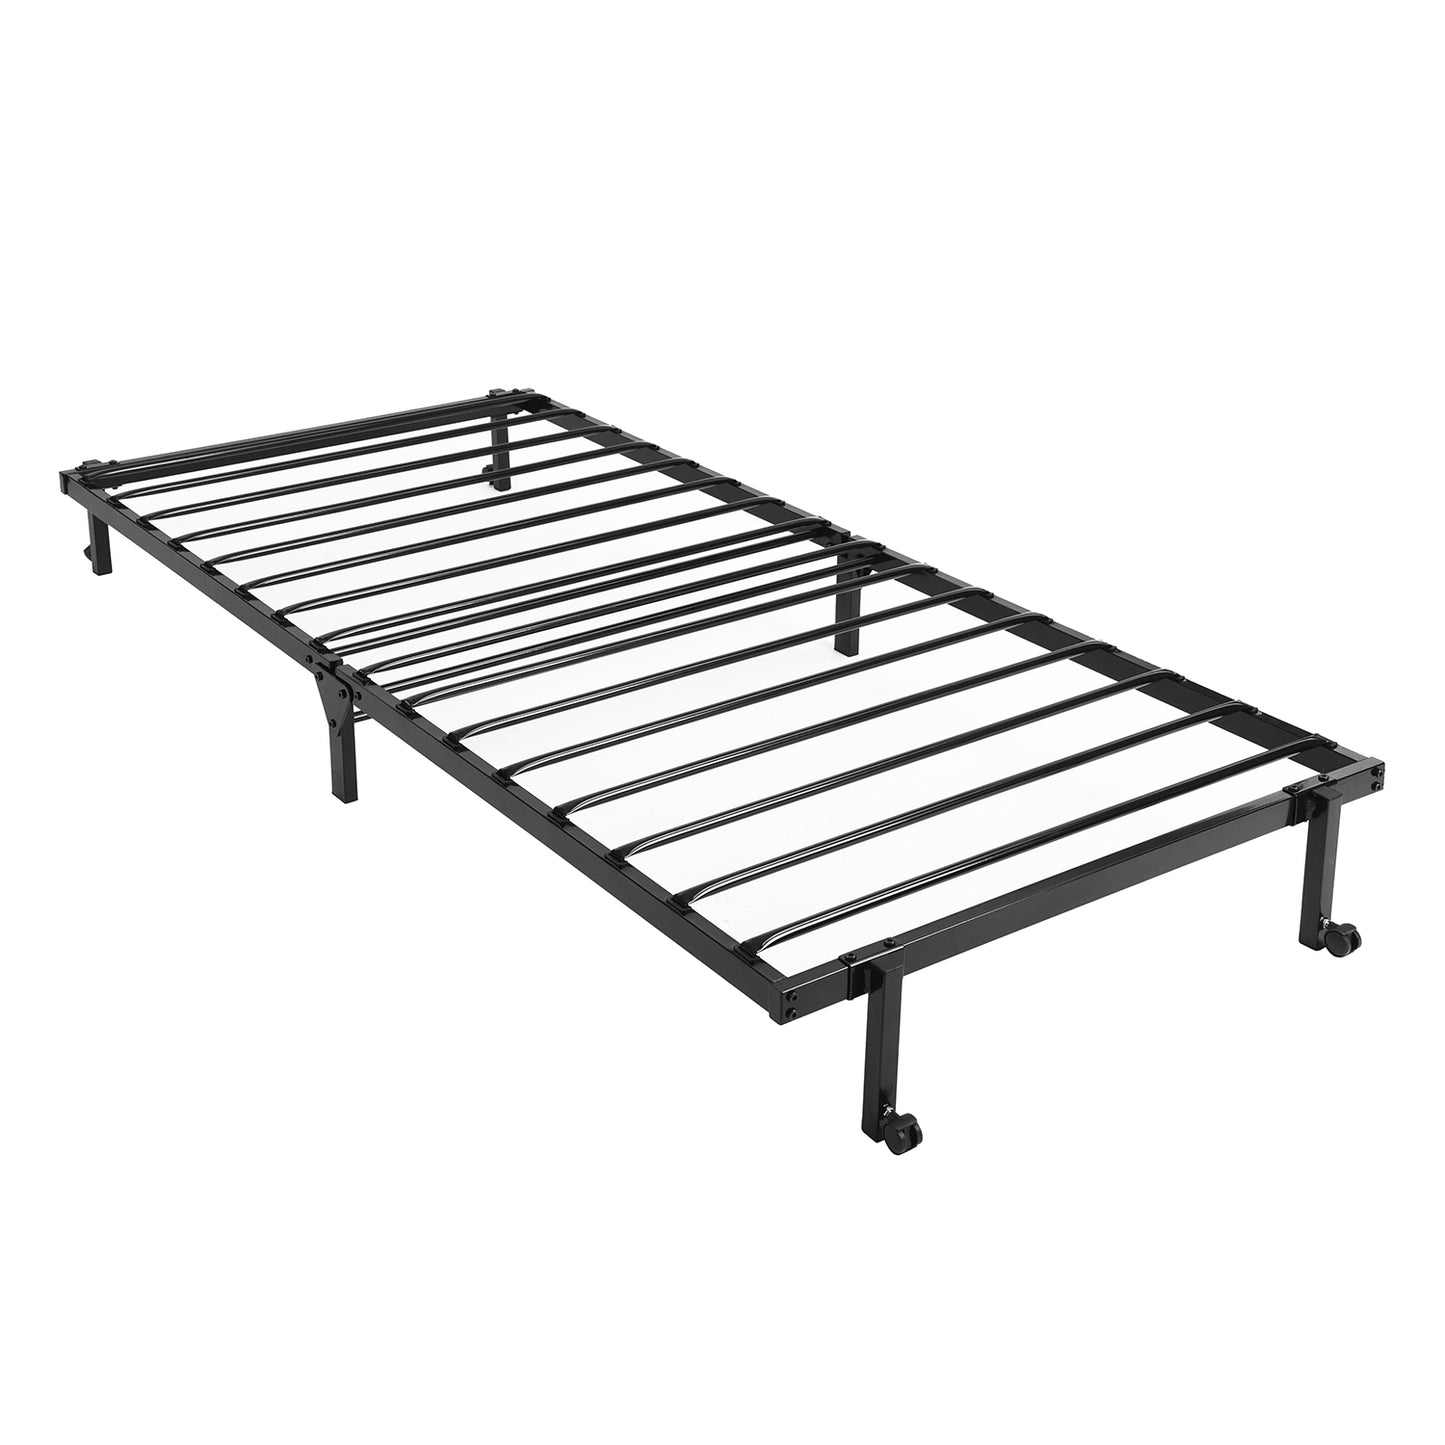 LIA Single/Double  Foldable Steel Bed Frame